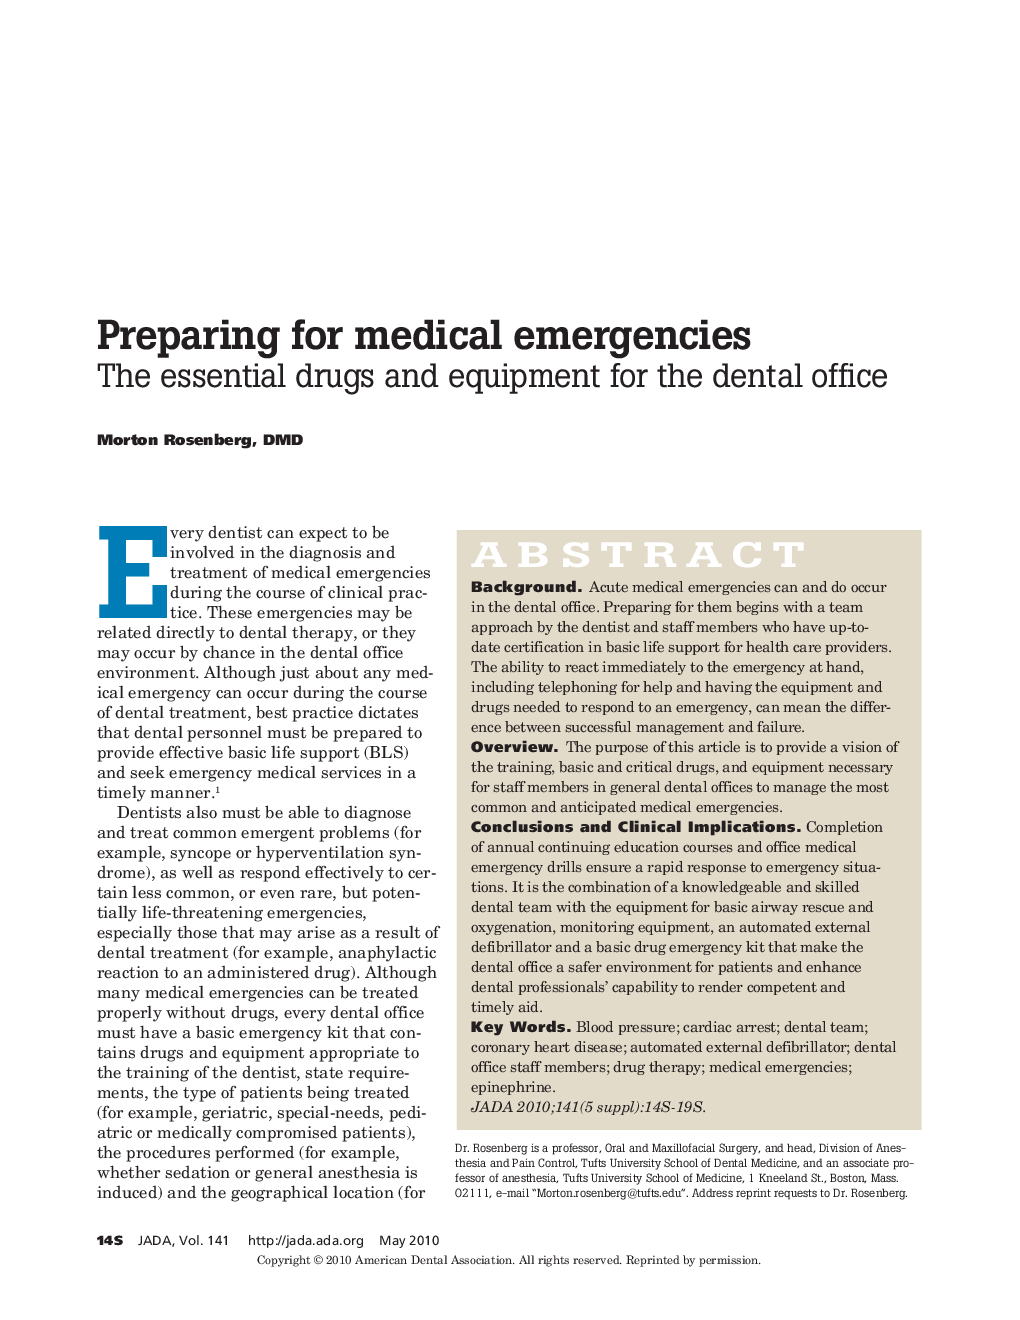 Preparing for Medical Emergencies